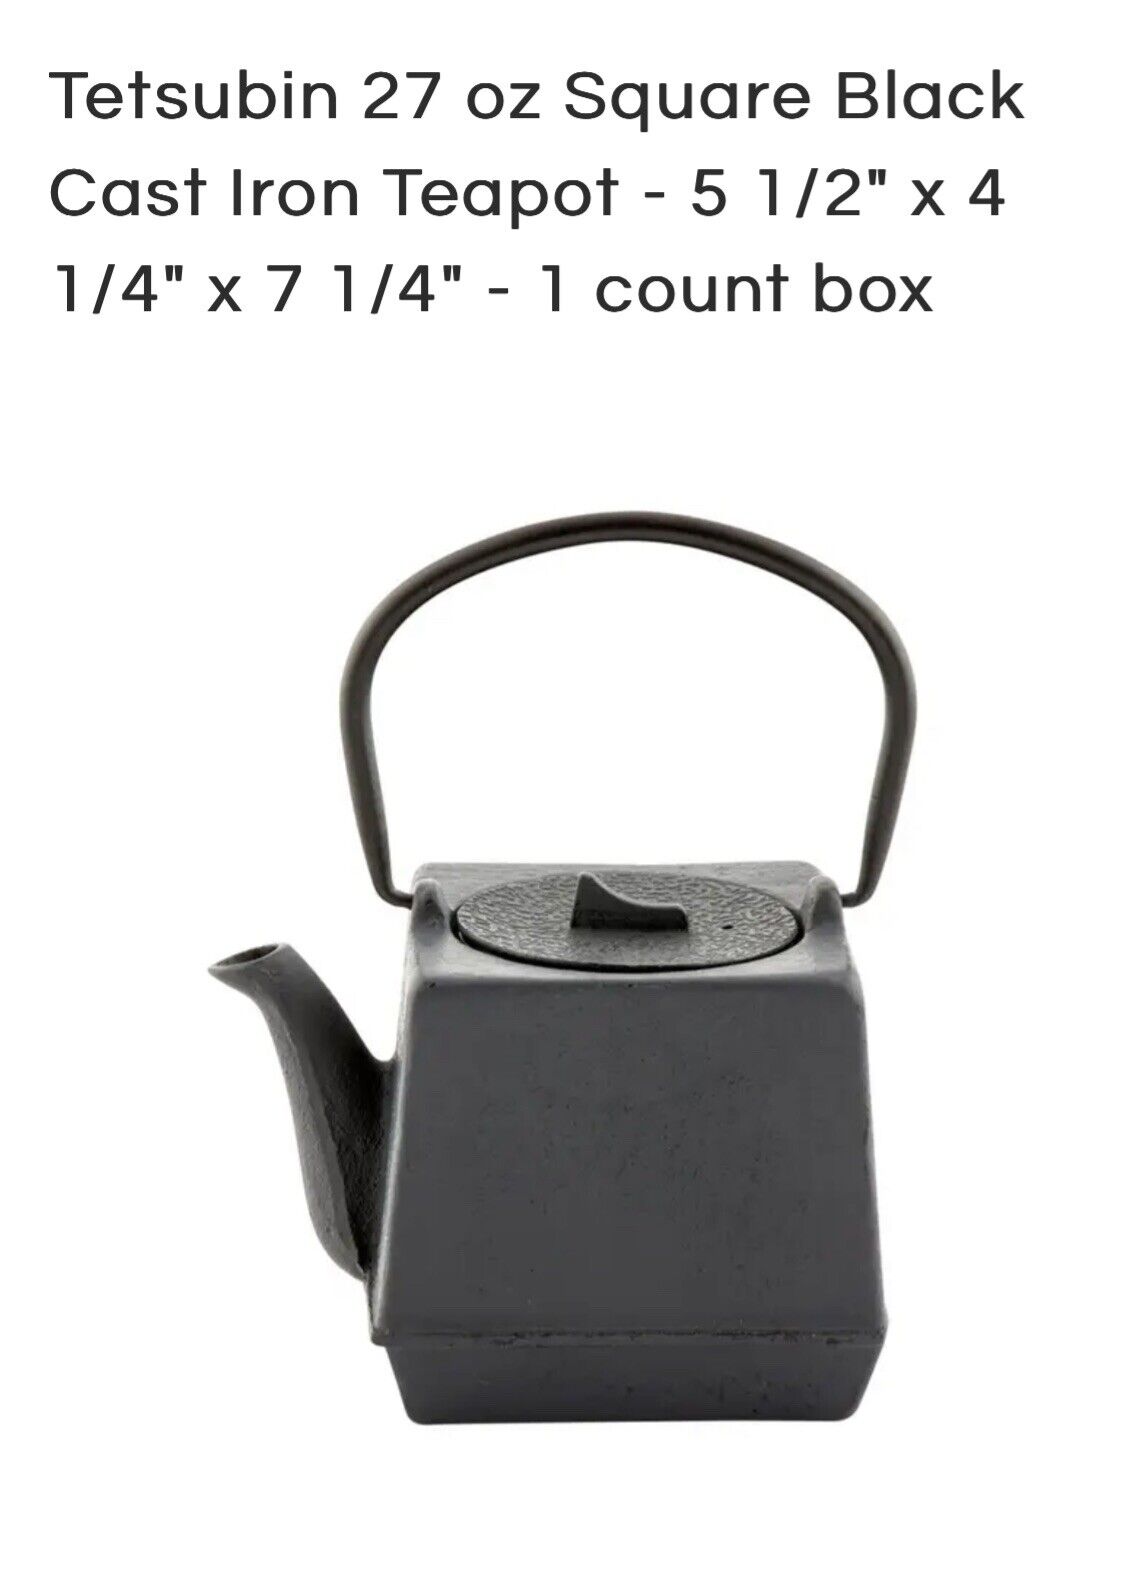 tetsubin 27oz square black cast iron teapot 5 1/2” x 4 1/4” with strainer. new